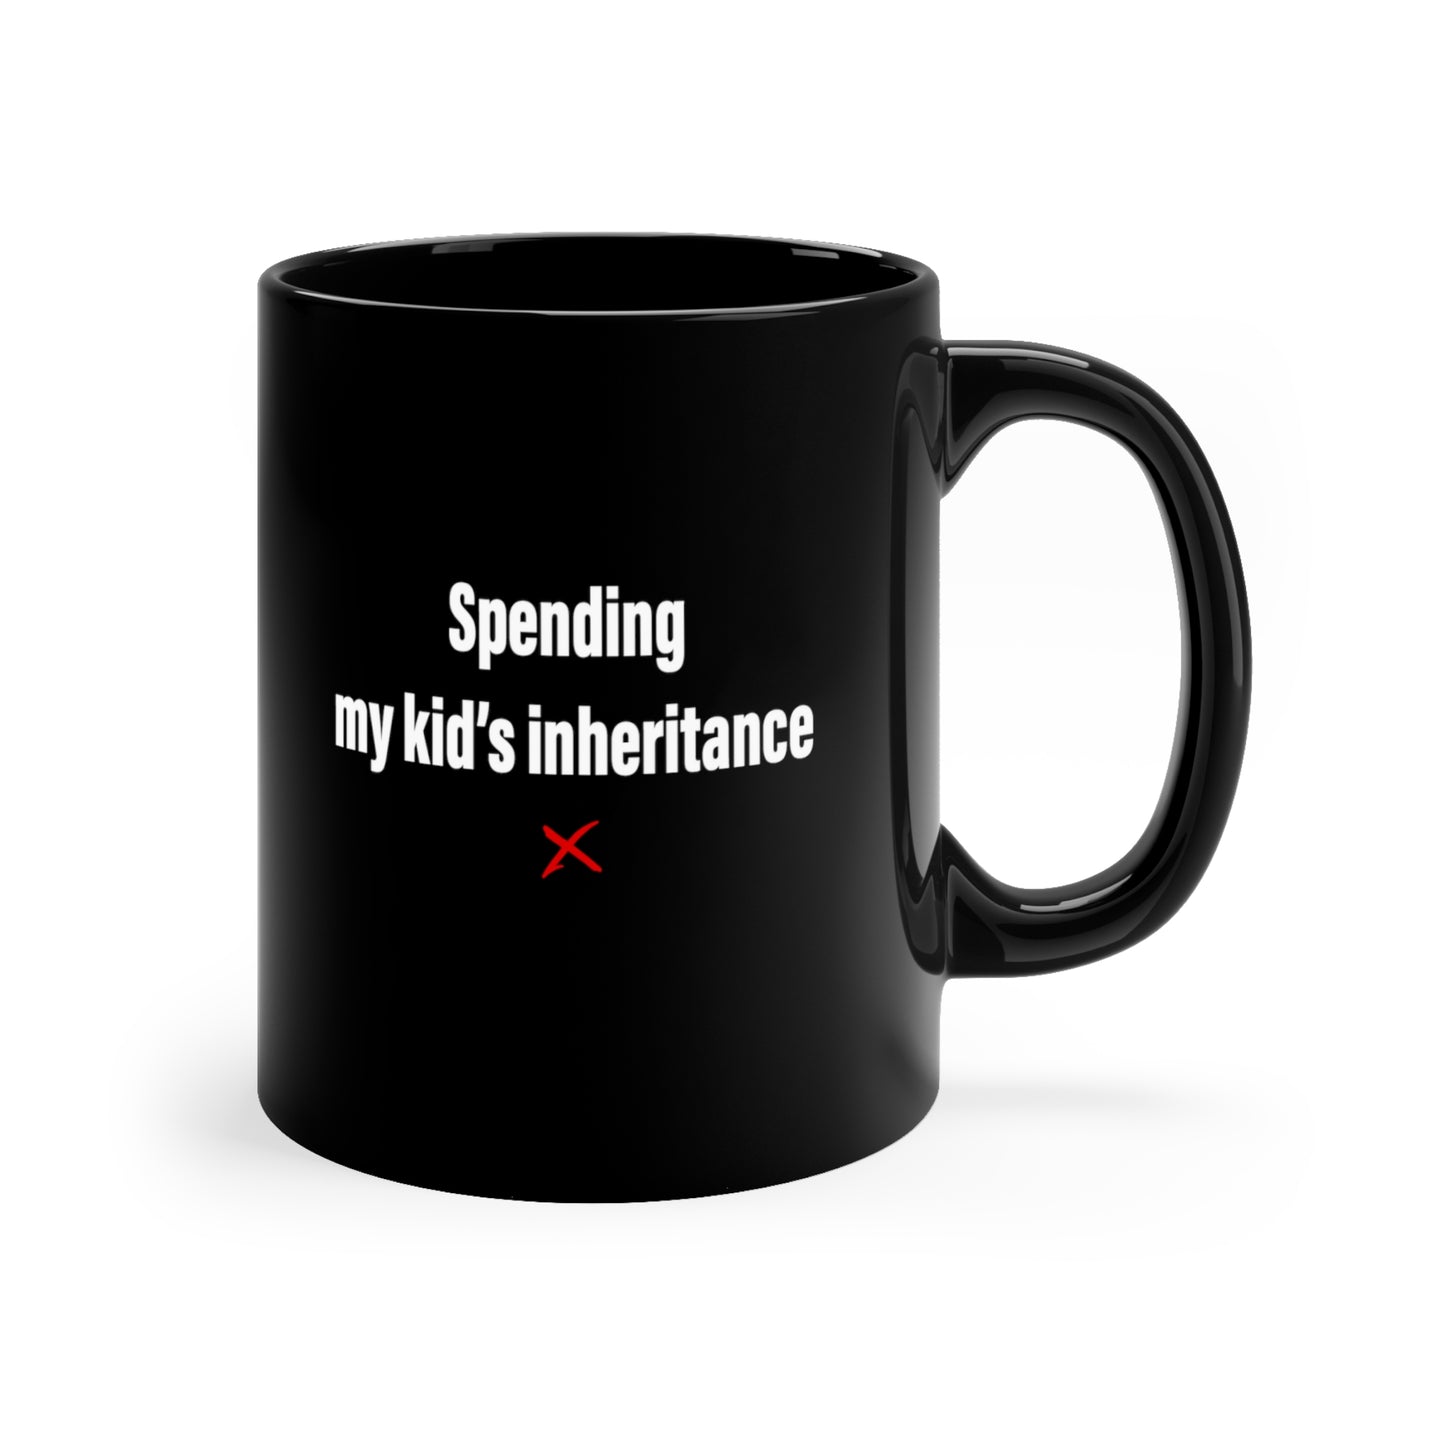 Spending my kid's inheritance - Mug